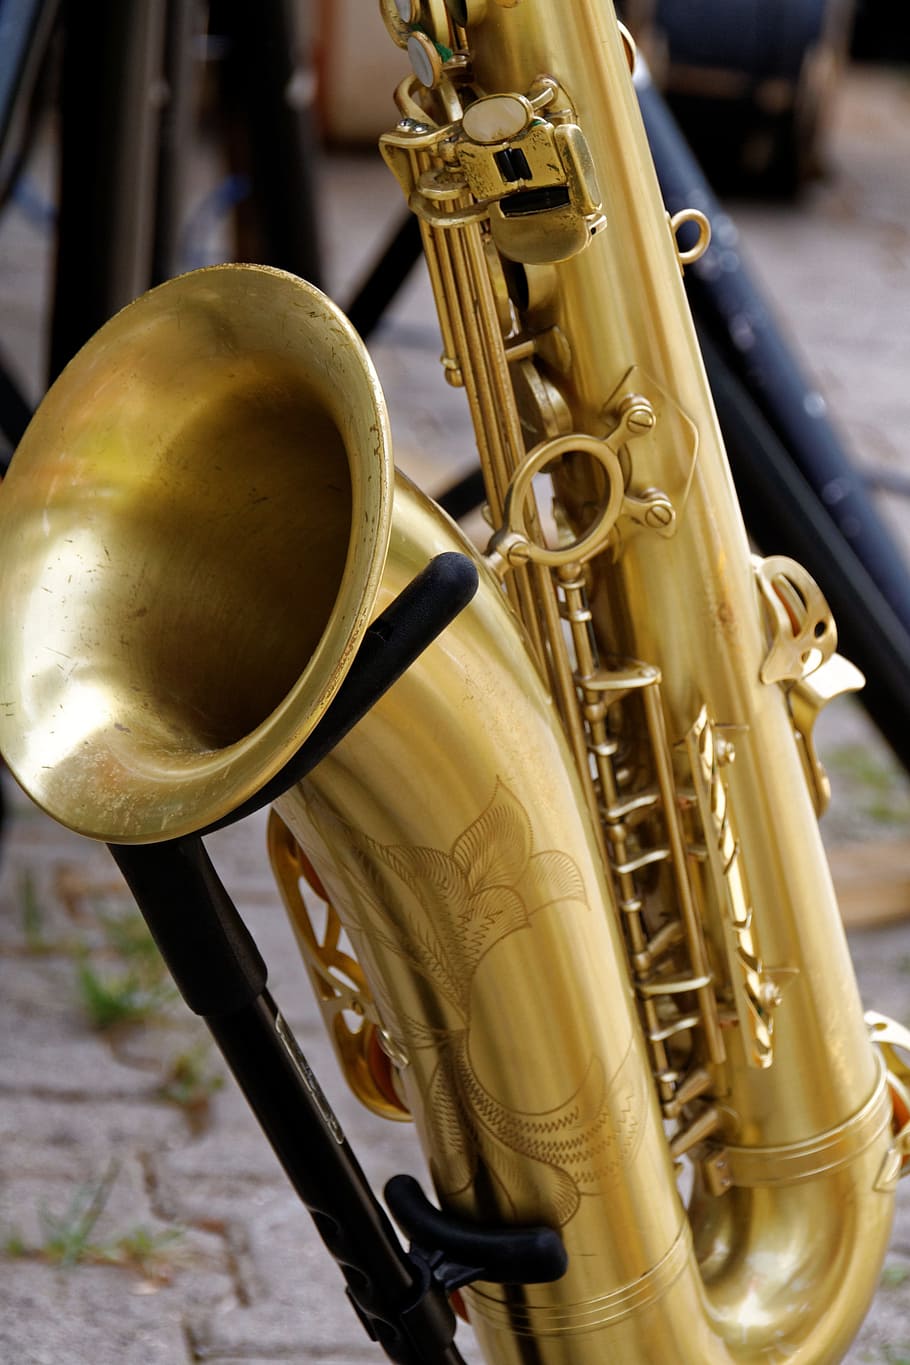 instrument, musical instrument, Musical Instrument, instrument, wind instrument, brass instrument, saxophone, saxophone detail, close up, analog, band